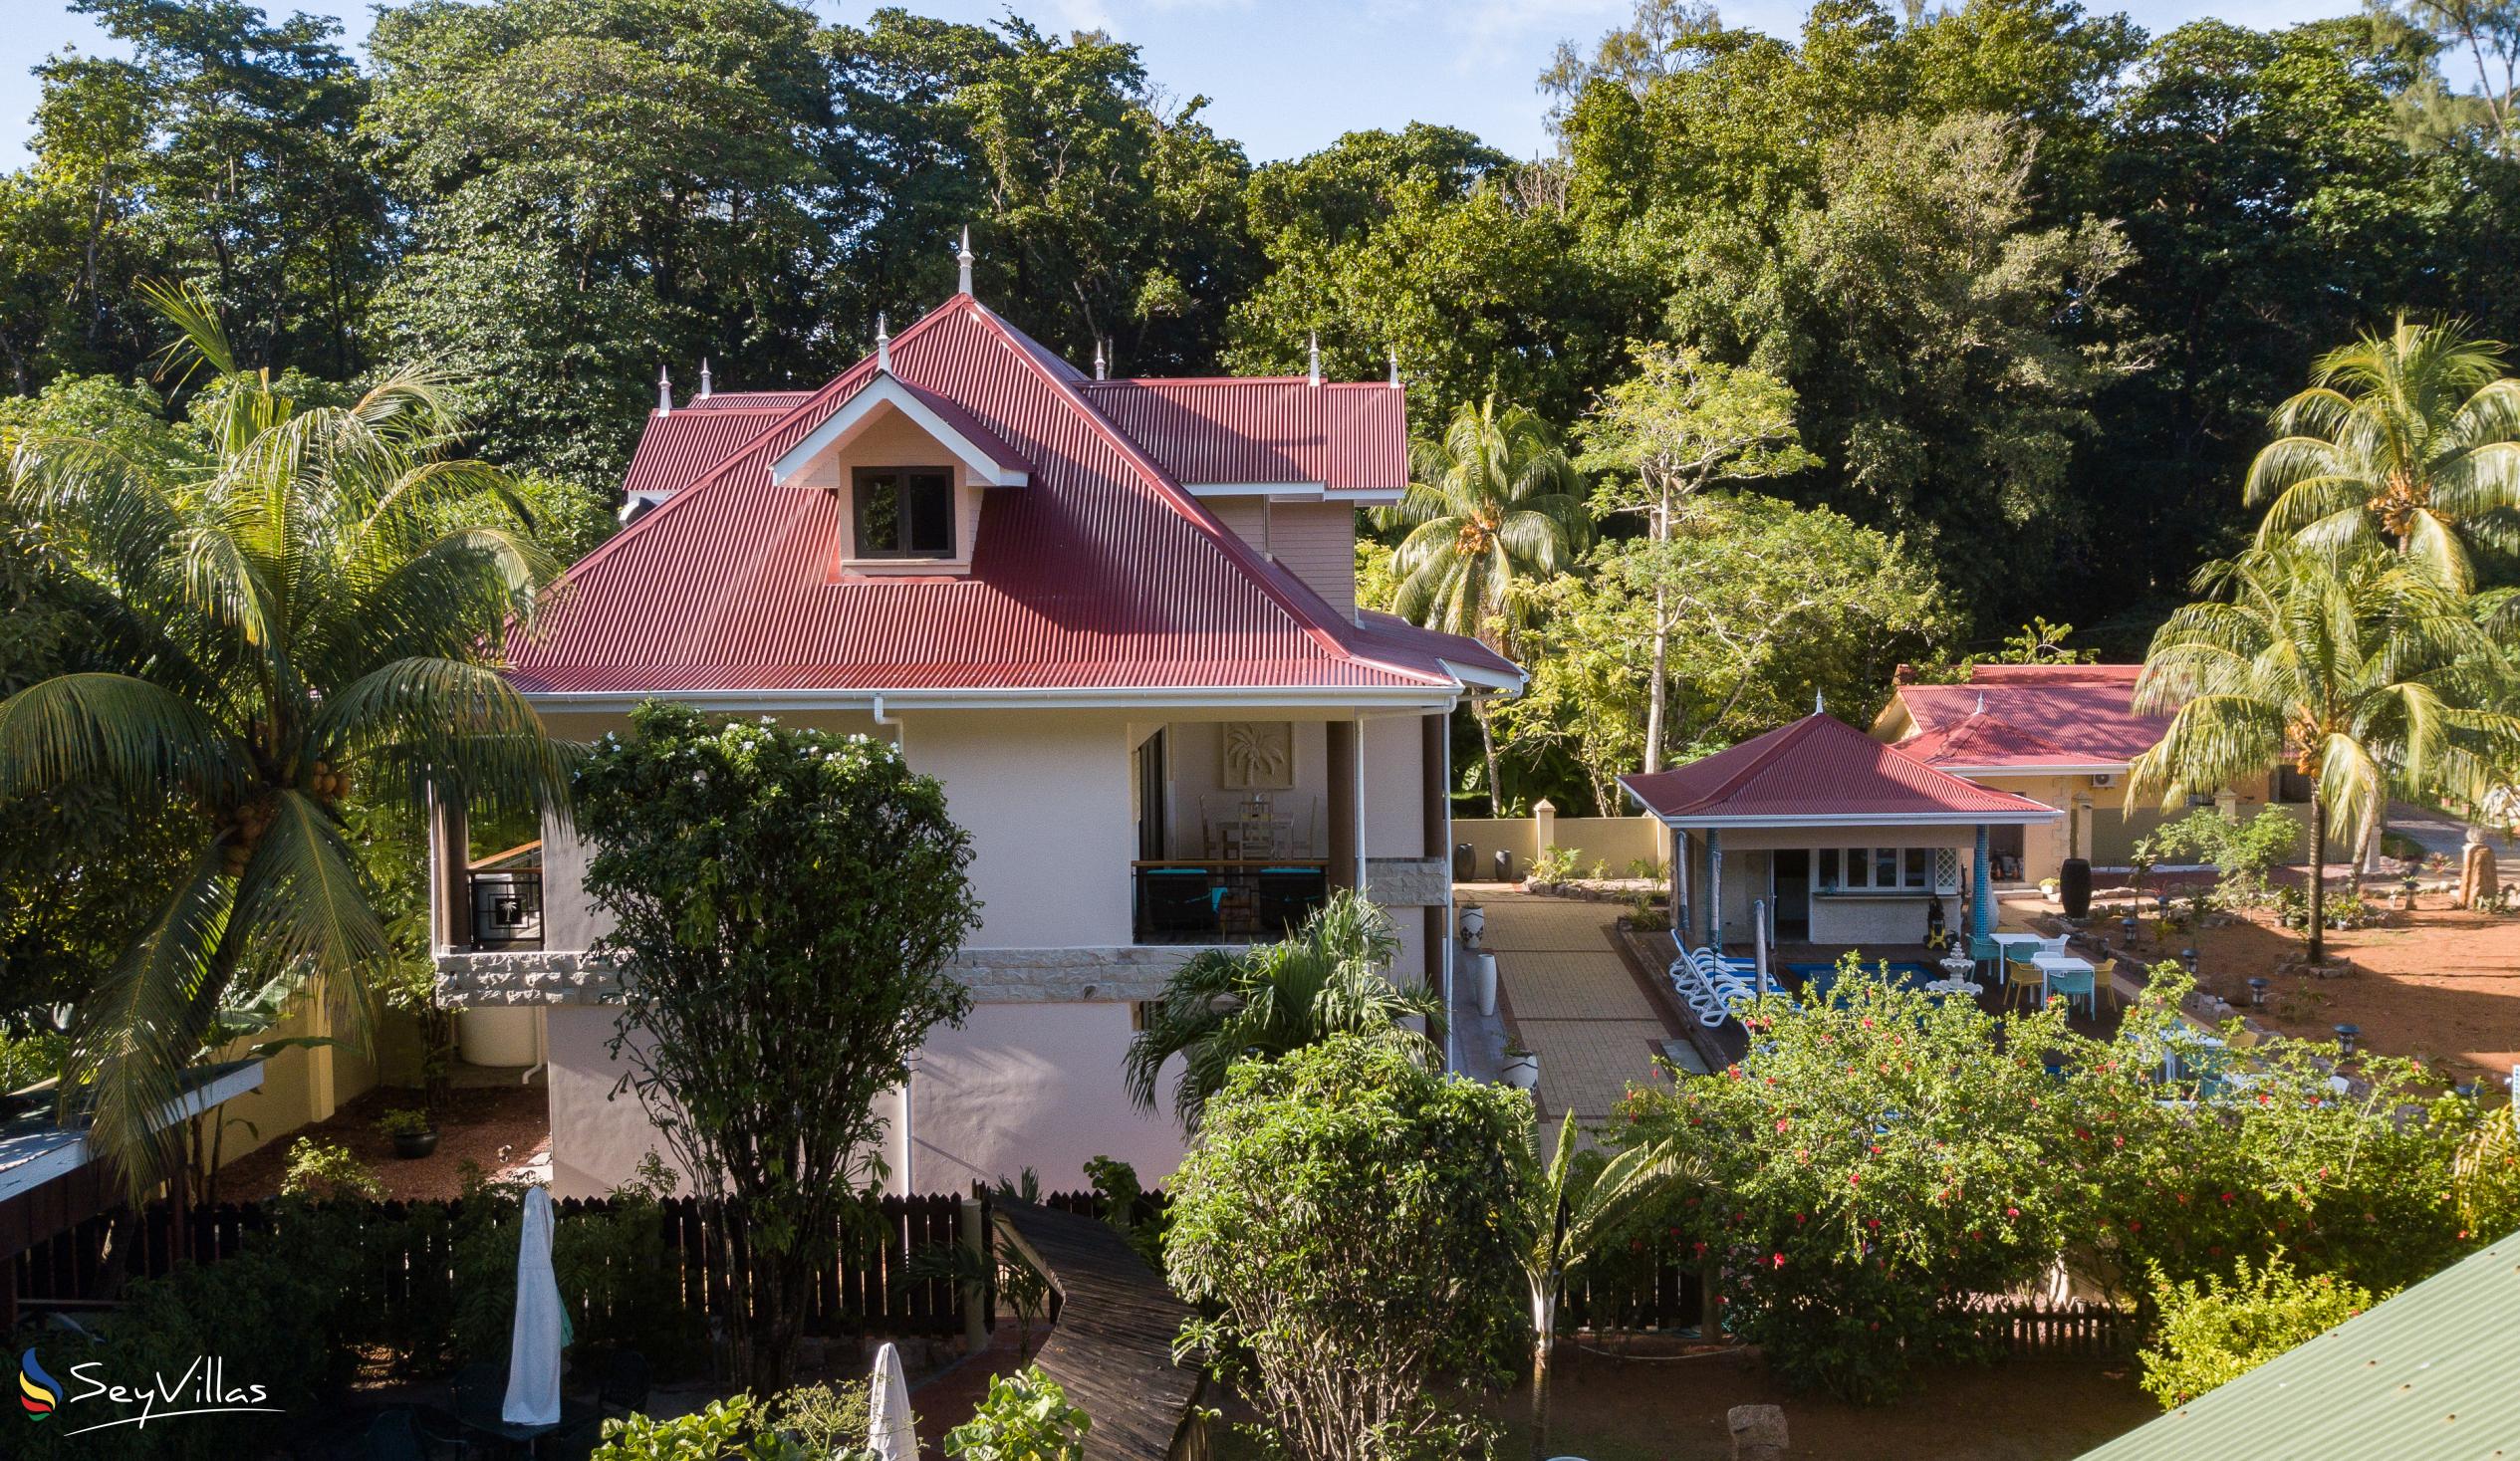 Foto 99: Casa de Leela - Aussenbereich - La Digue (Seychellen)